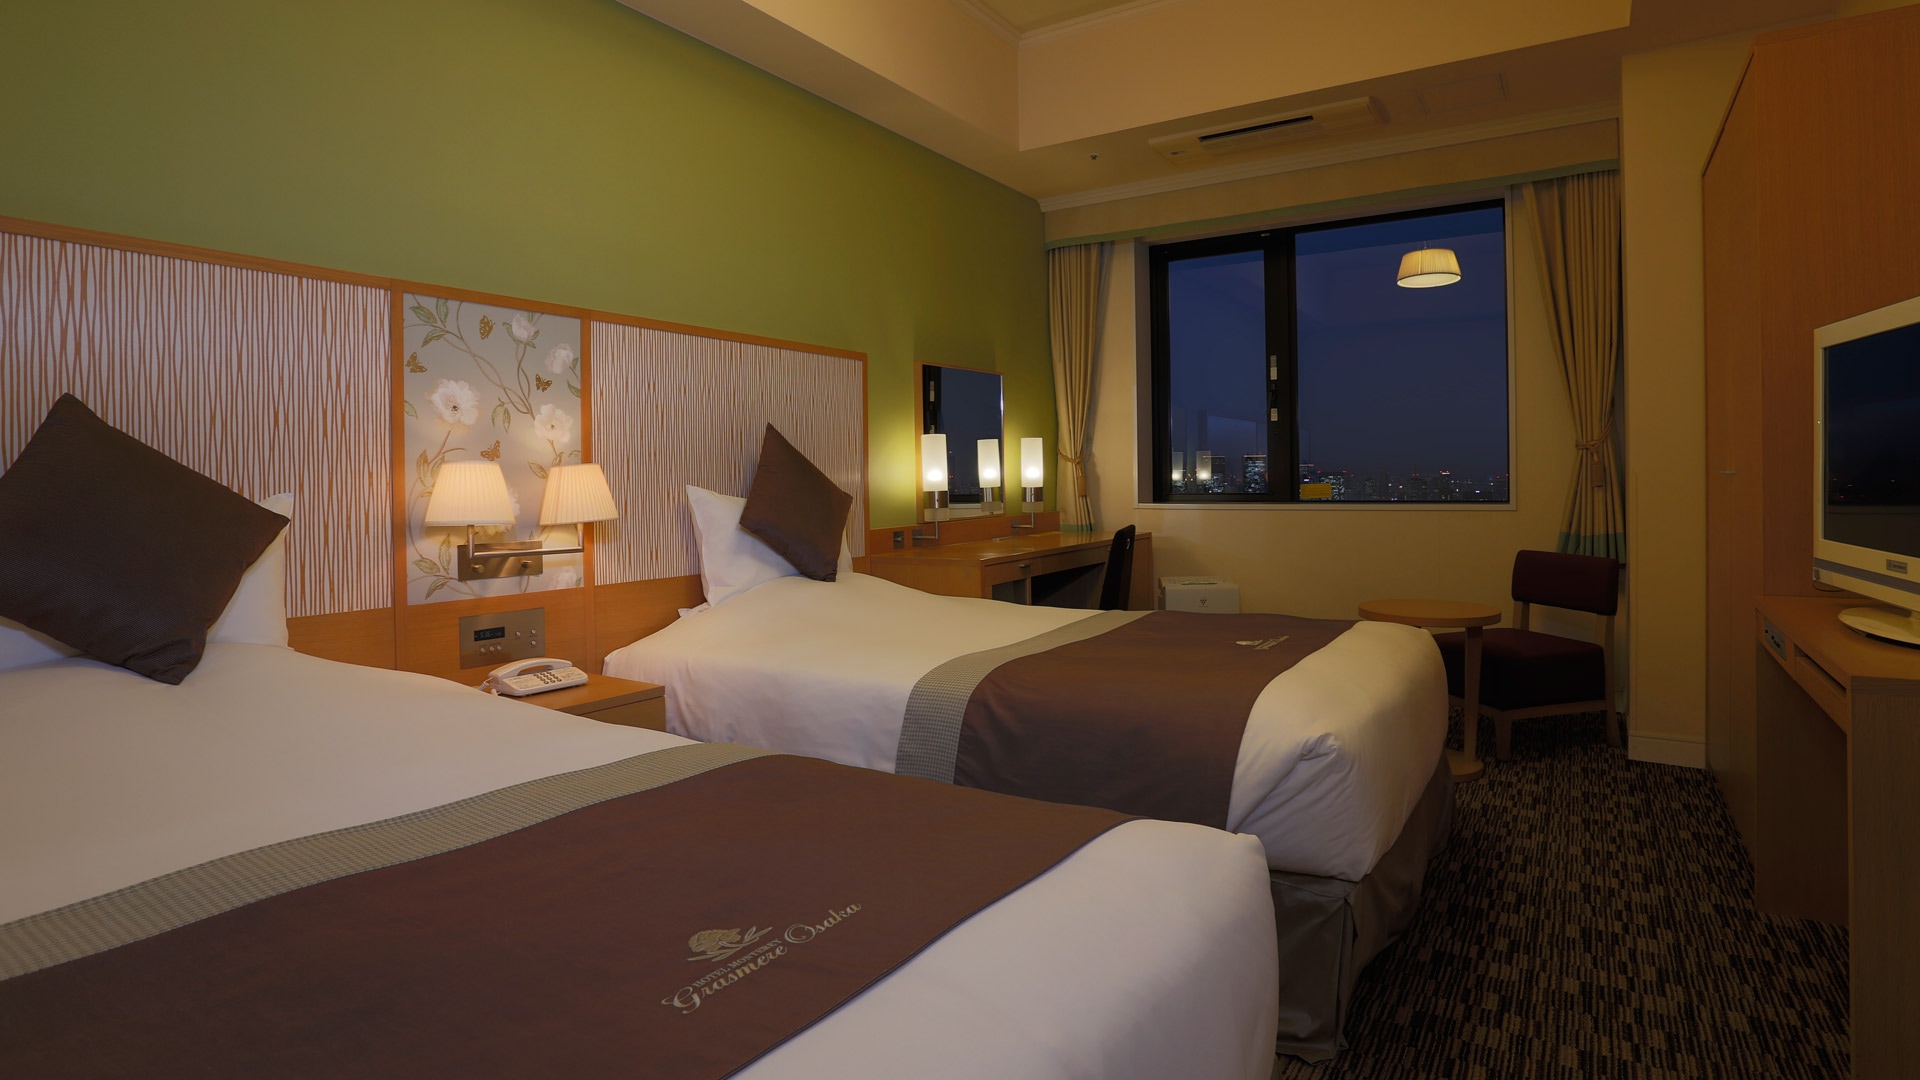 [Guest room] Standard twin (bed width 120 cm & times; 203 cm)